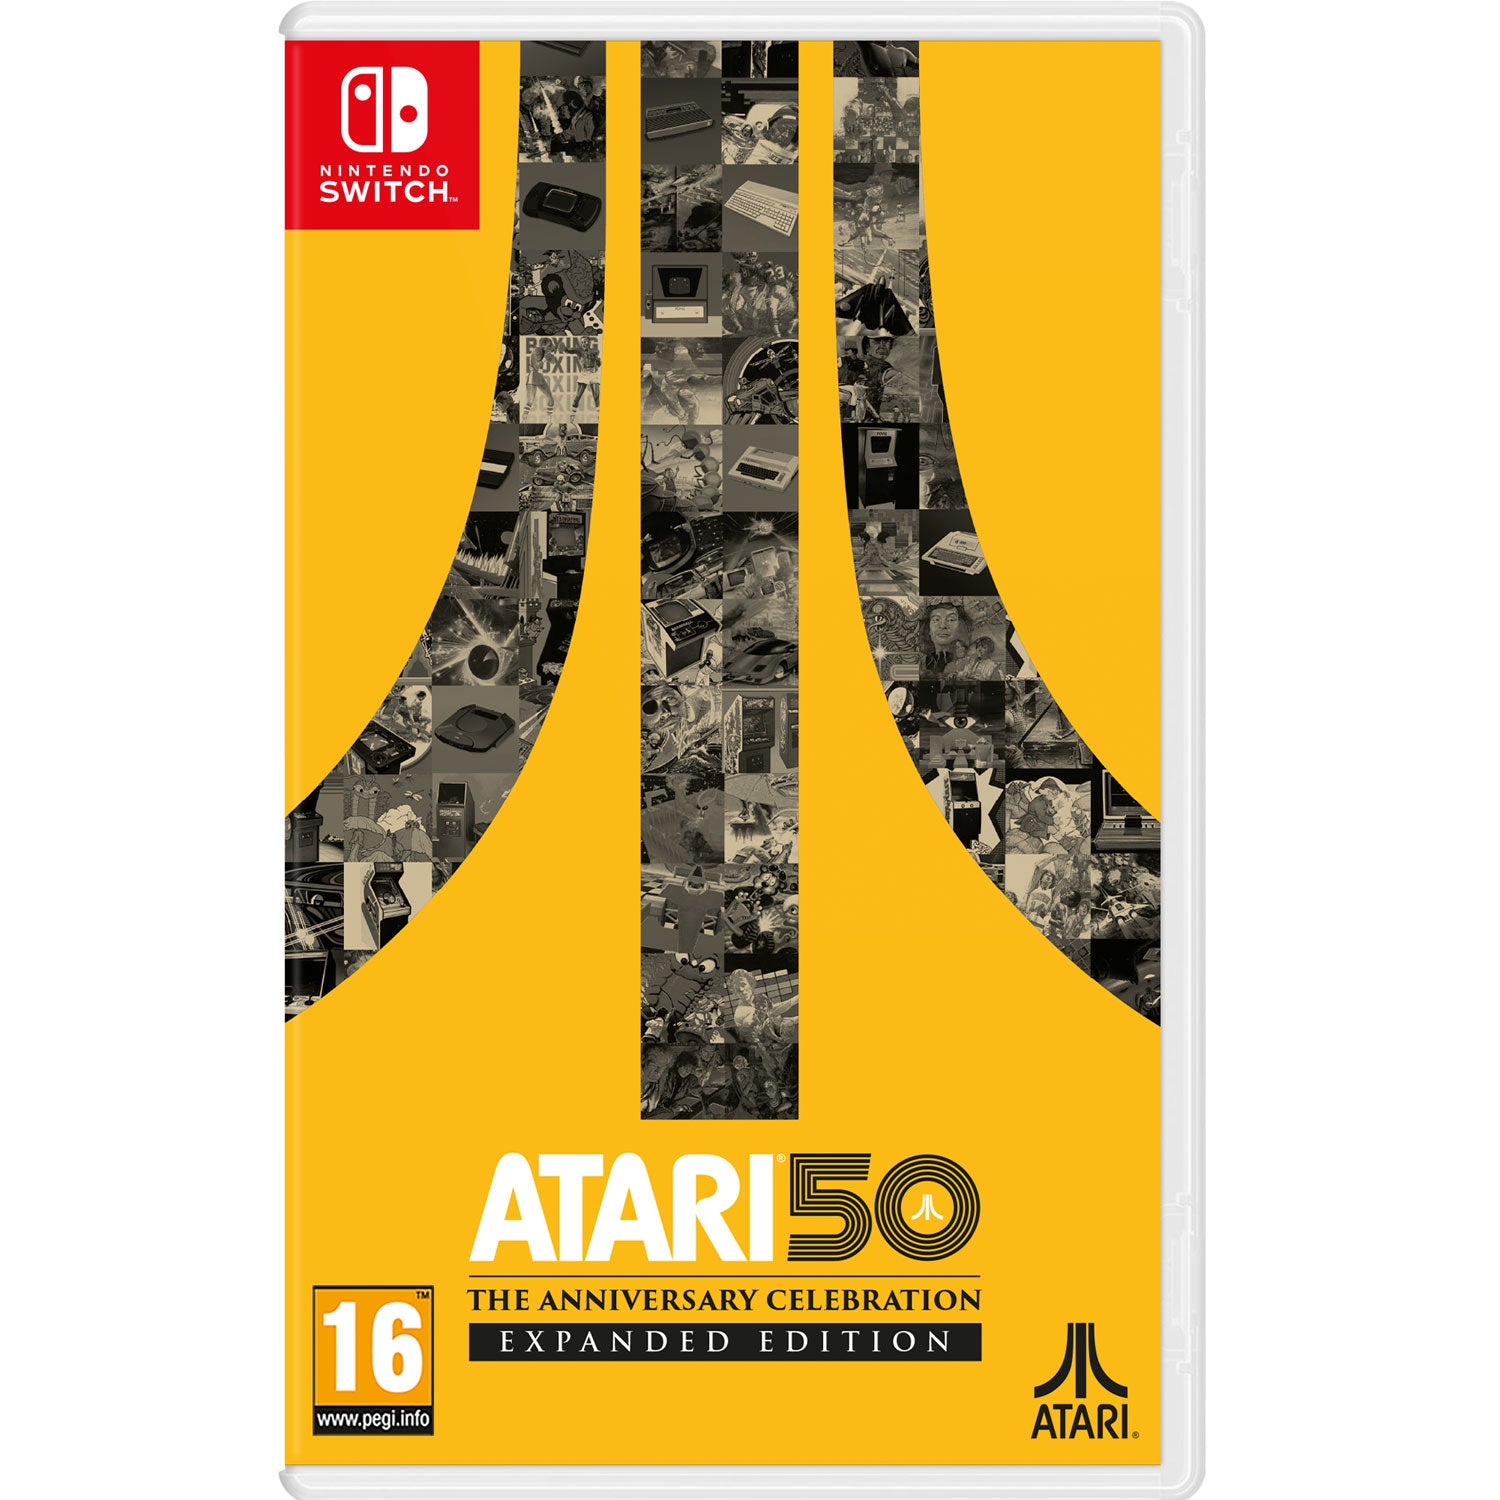 Nintendo Switch Atari 50: The Anniversary Celebration [Expanded Edition]